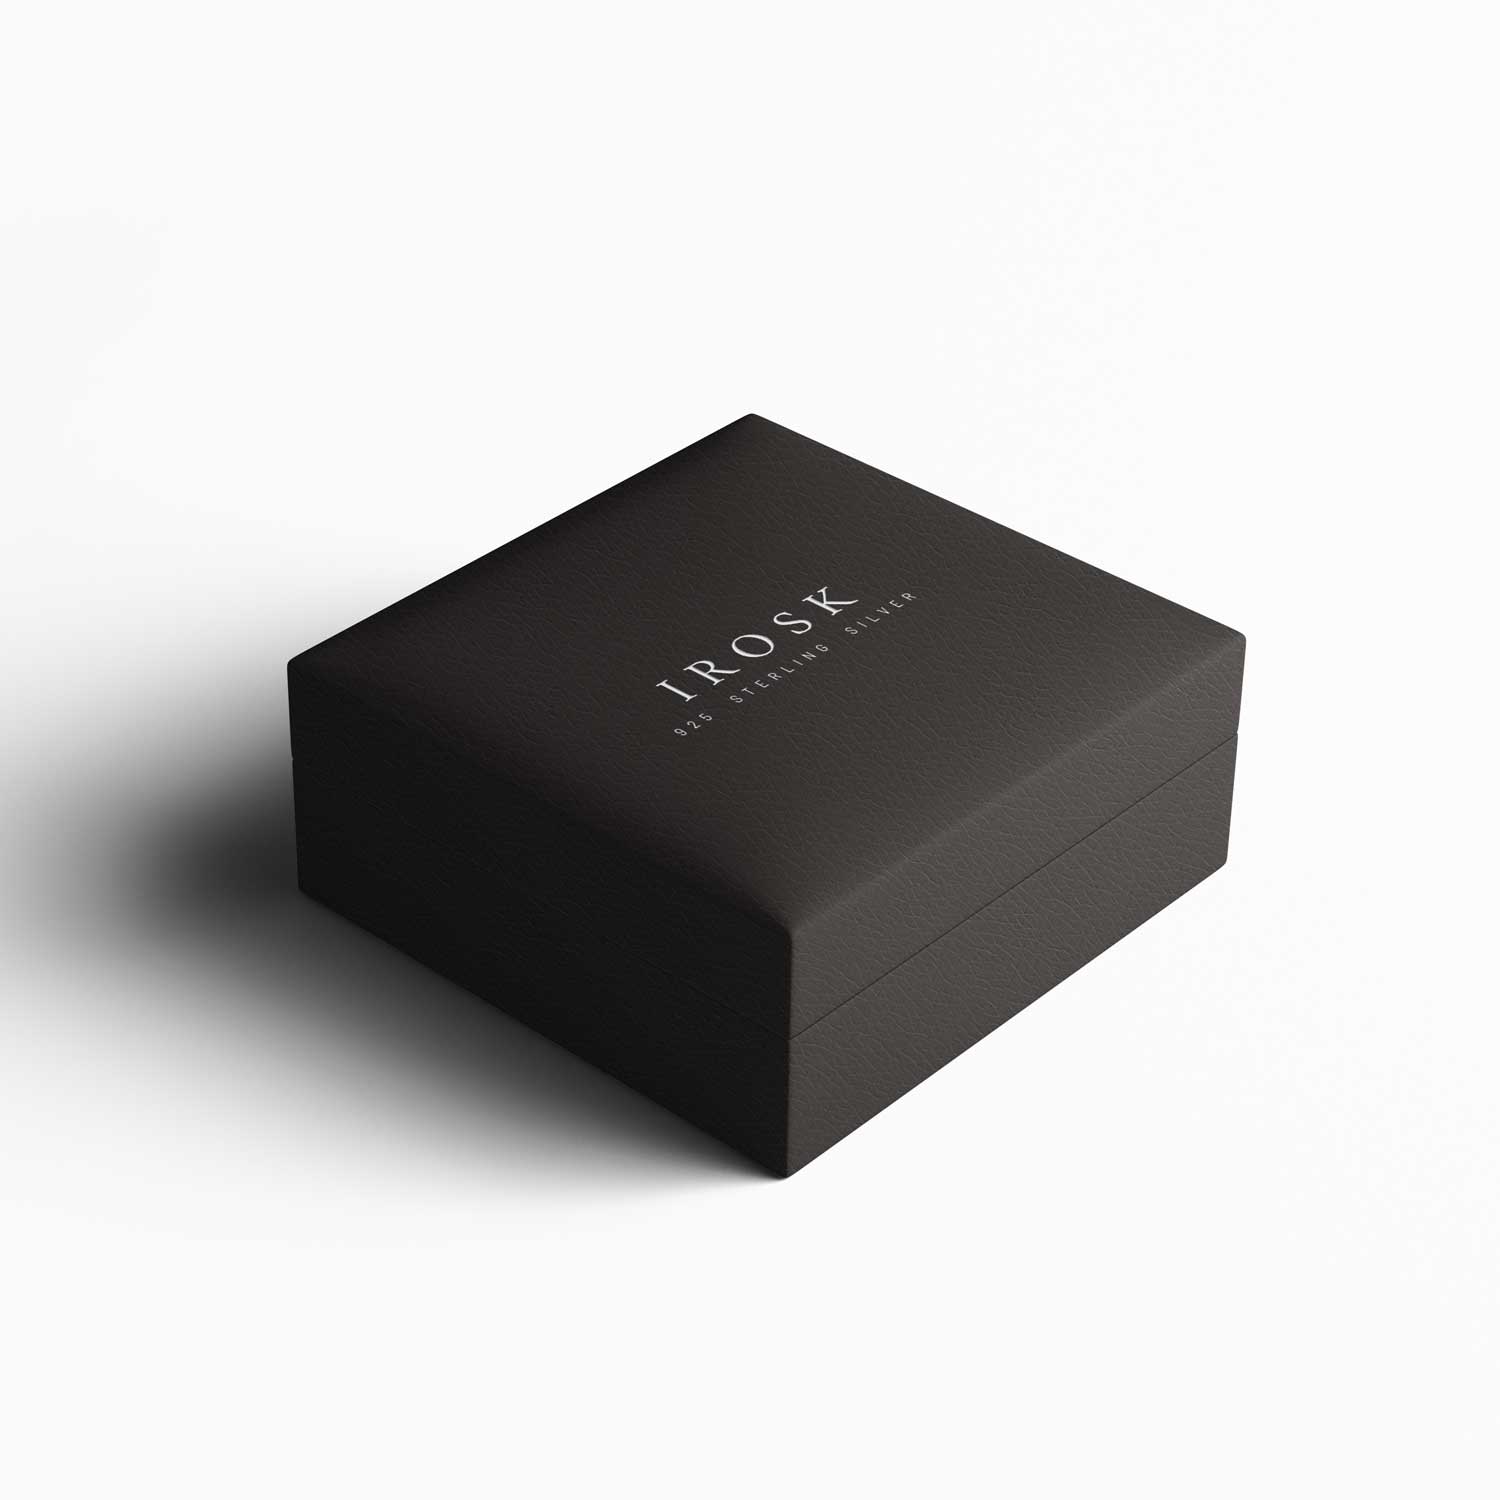 Luxurious Irosk Jewellery Box for Elegant Storage